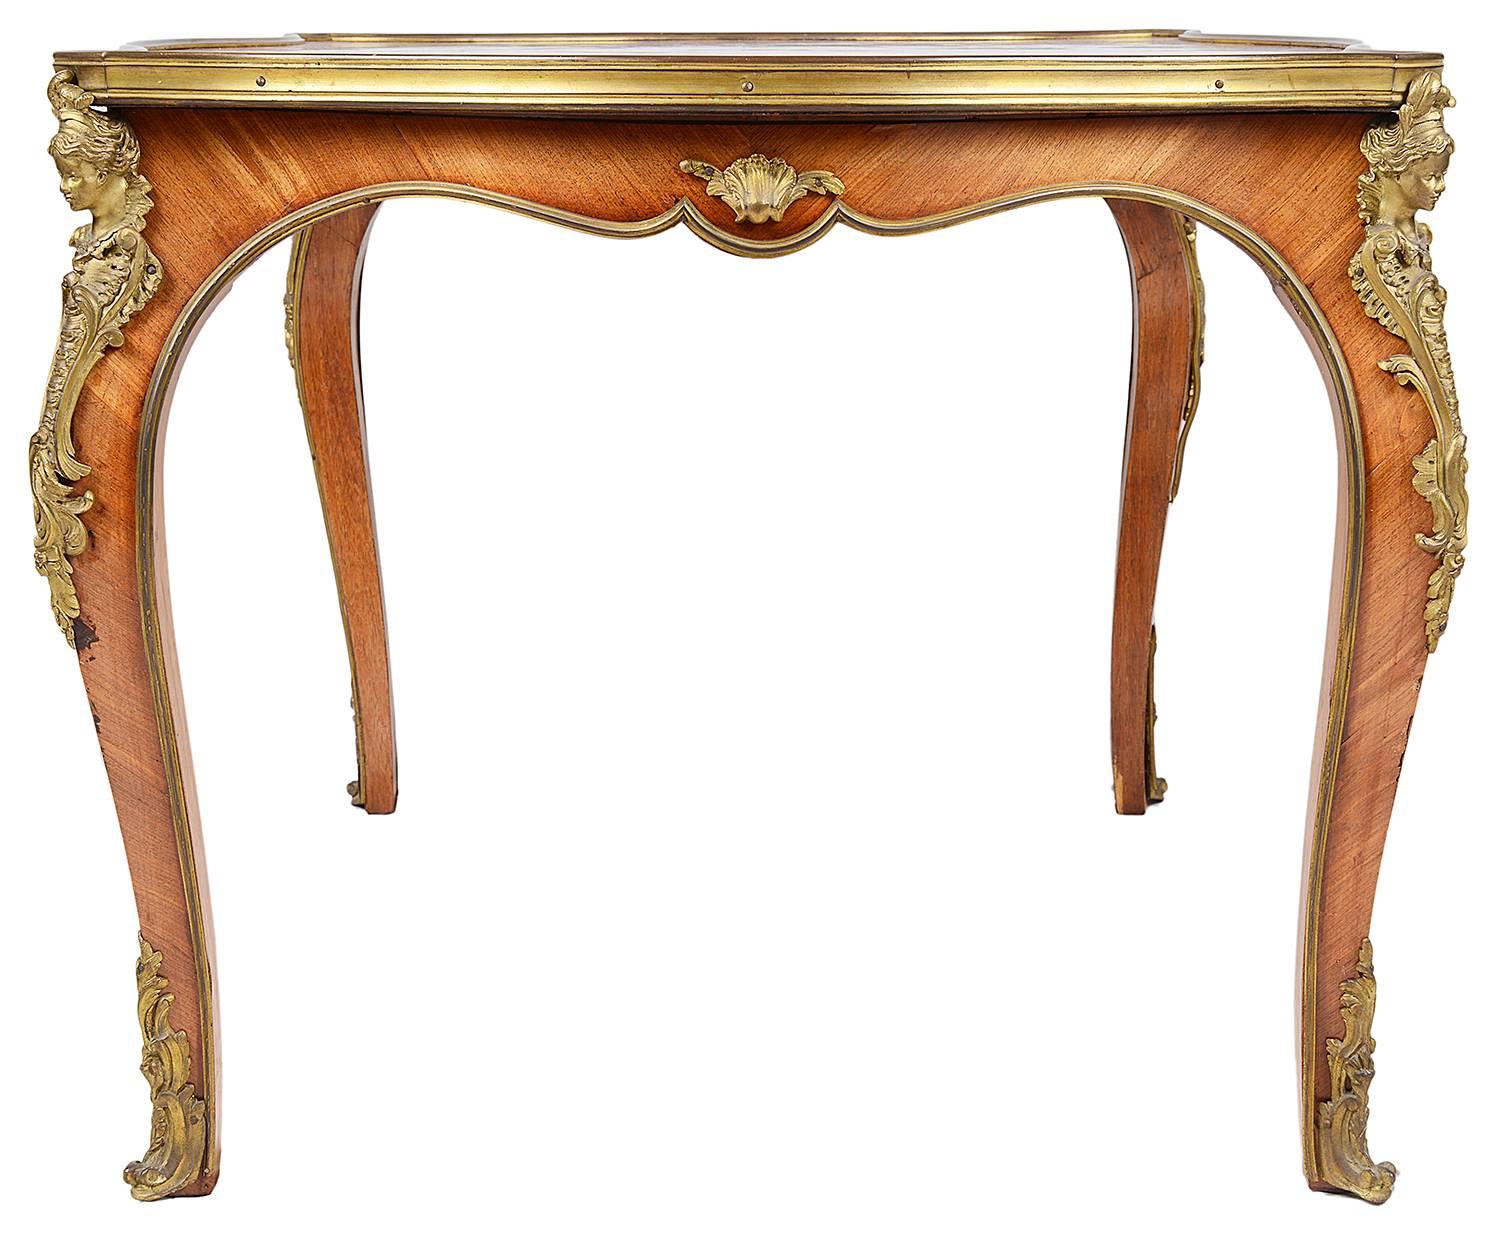 A good quality French Louis XVI style kingwood coffee table, having a quartered veneered top, ormolu mounts and raised on elegant cabriole legs.